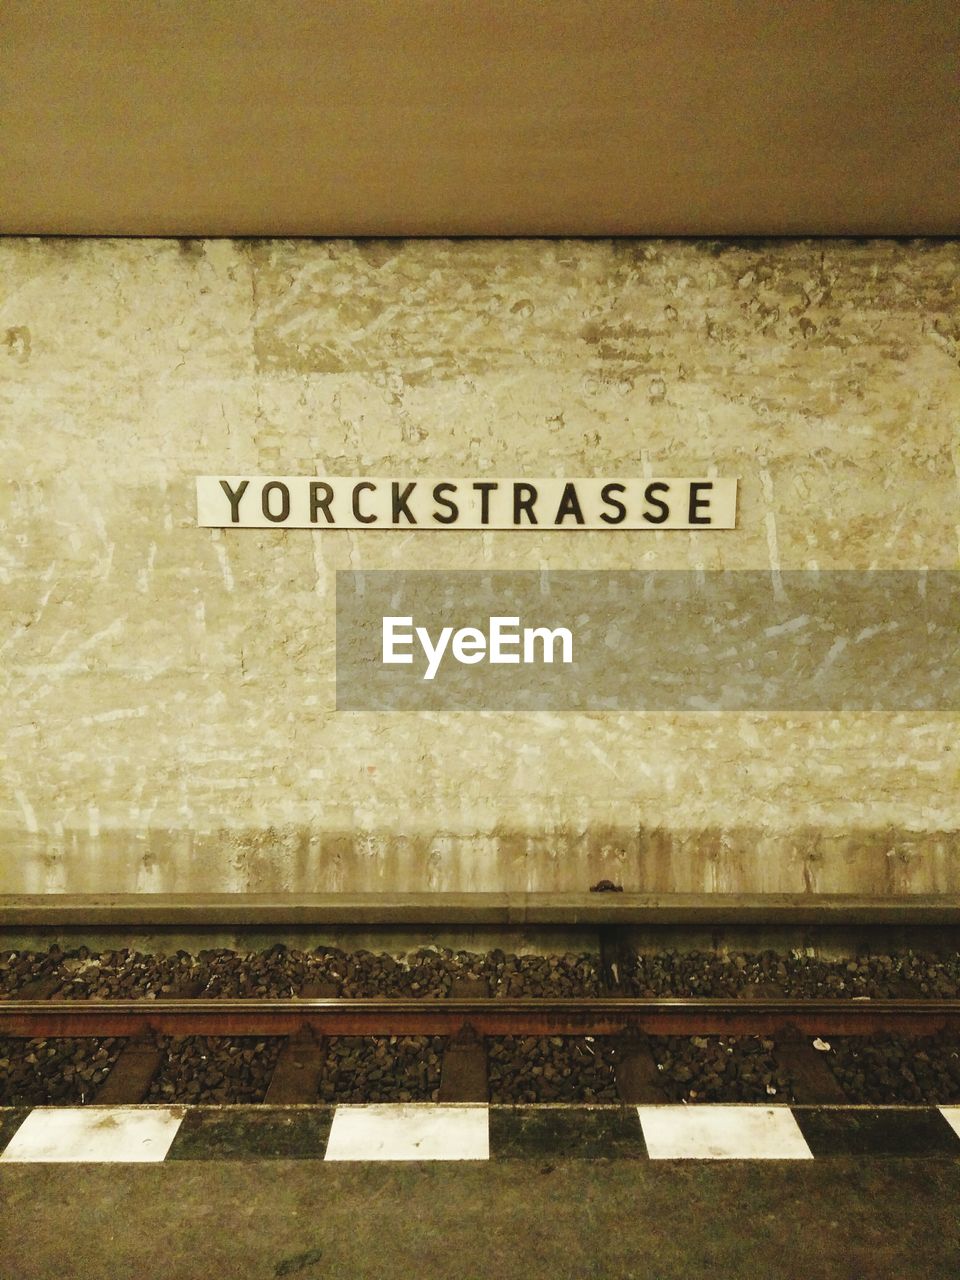 Text on wall at berlin yorckstrasse station